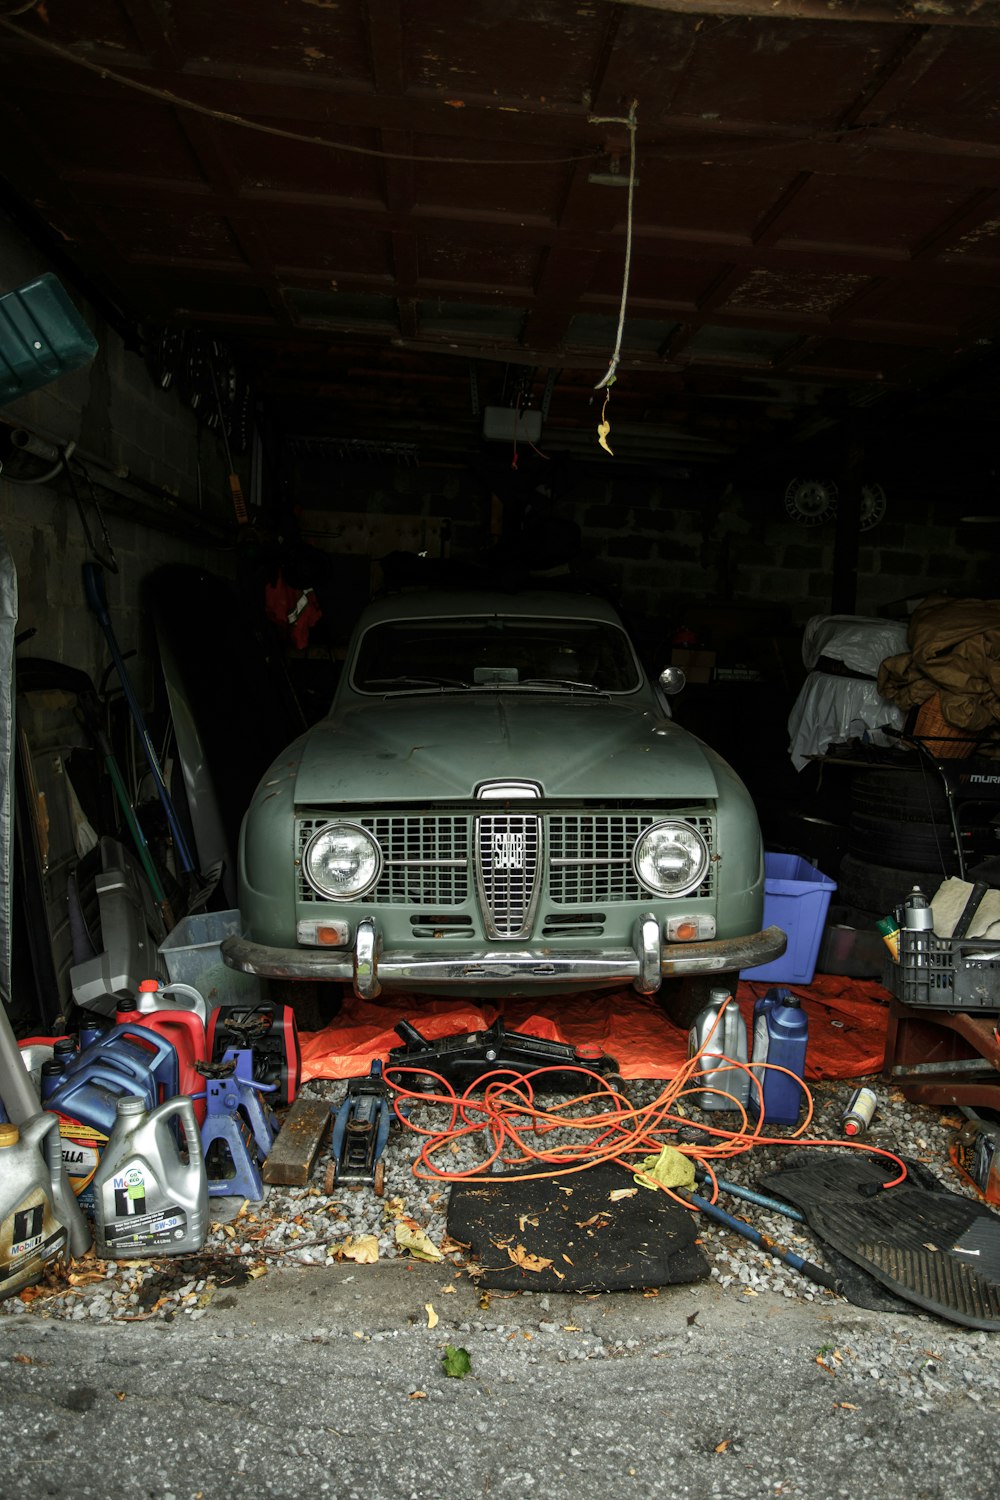 green vehicle inside garage